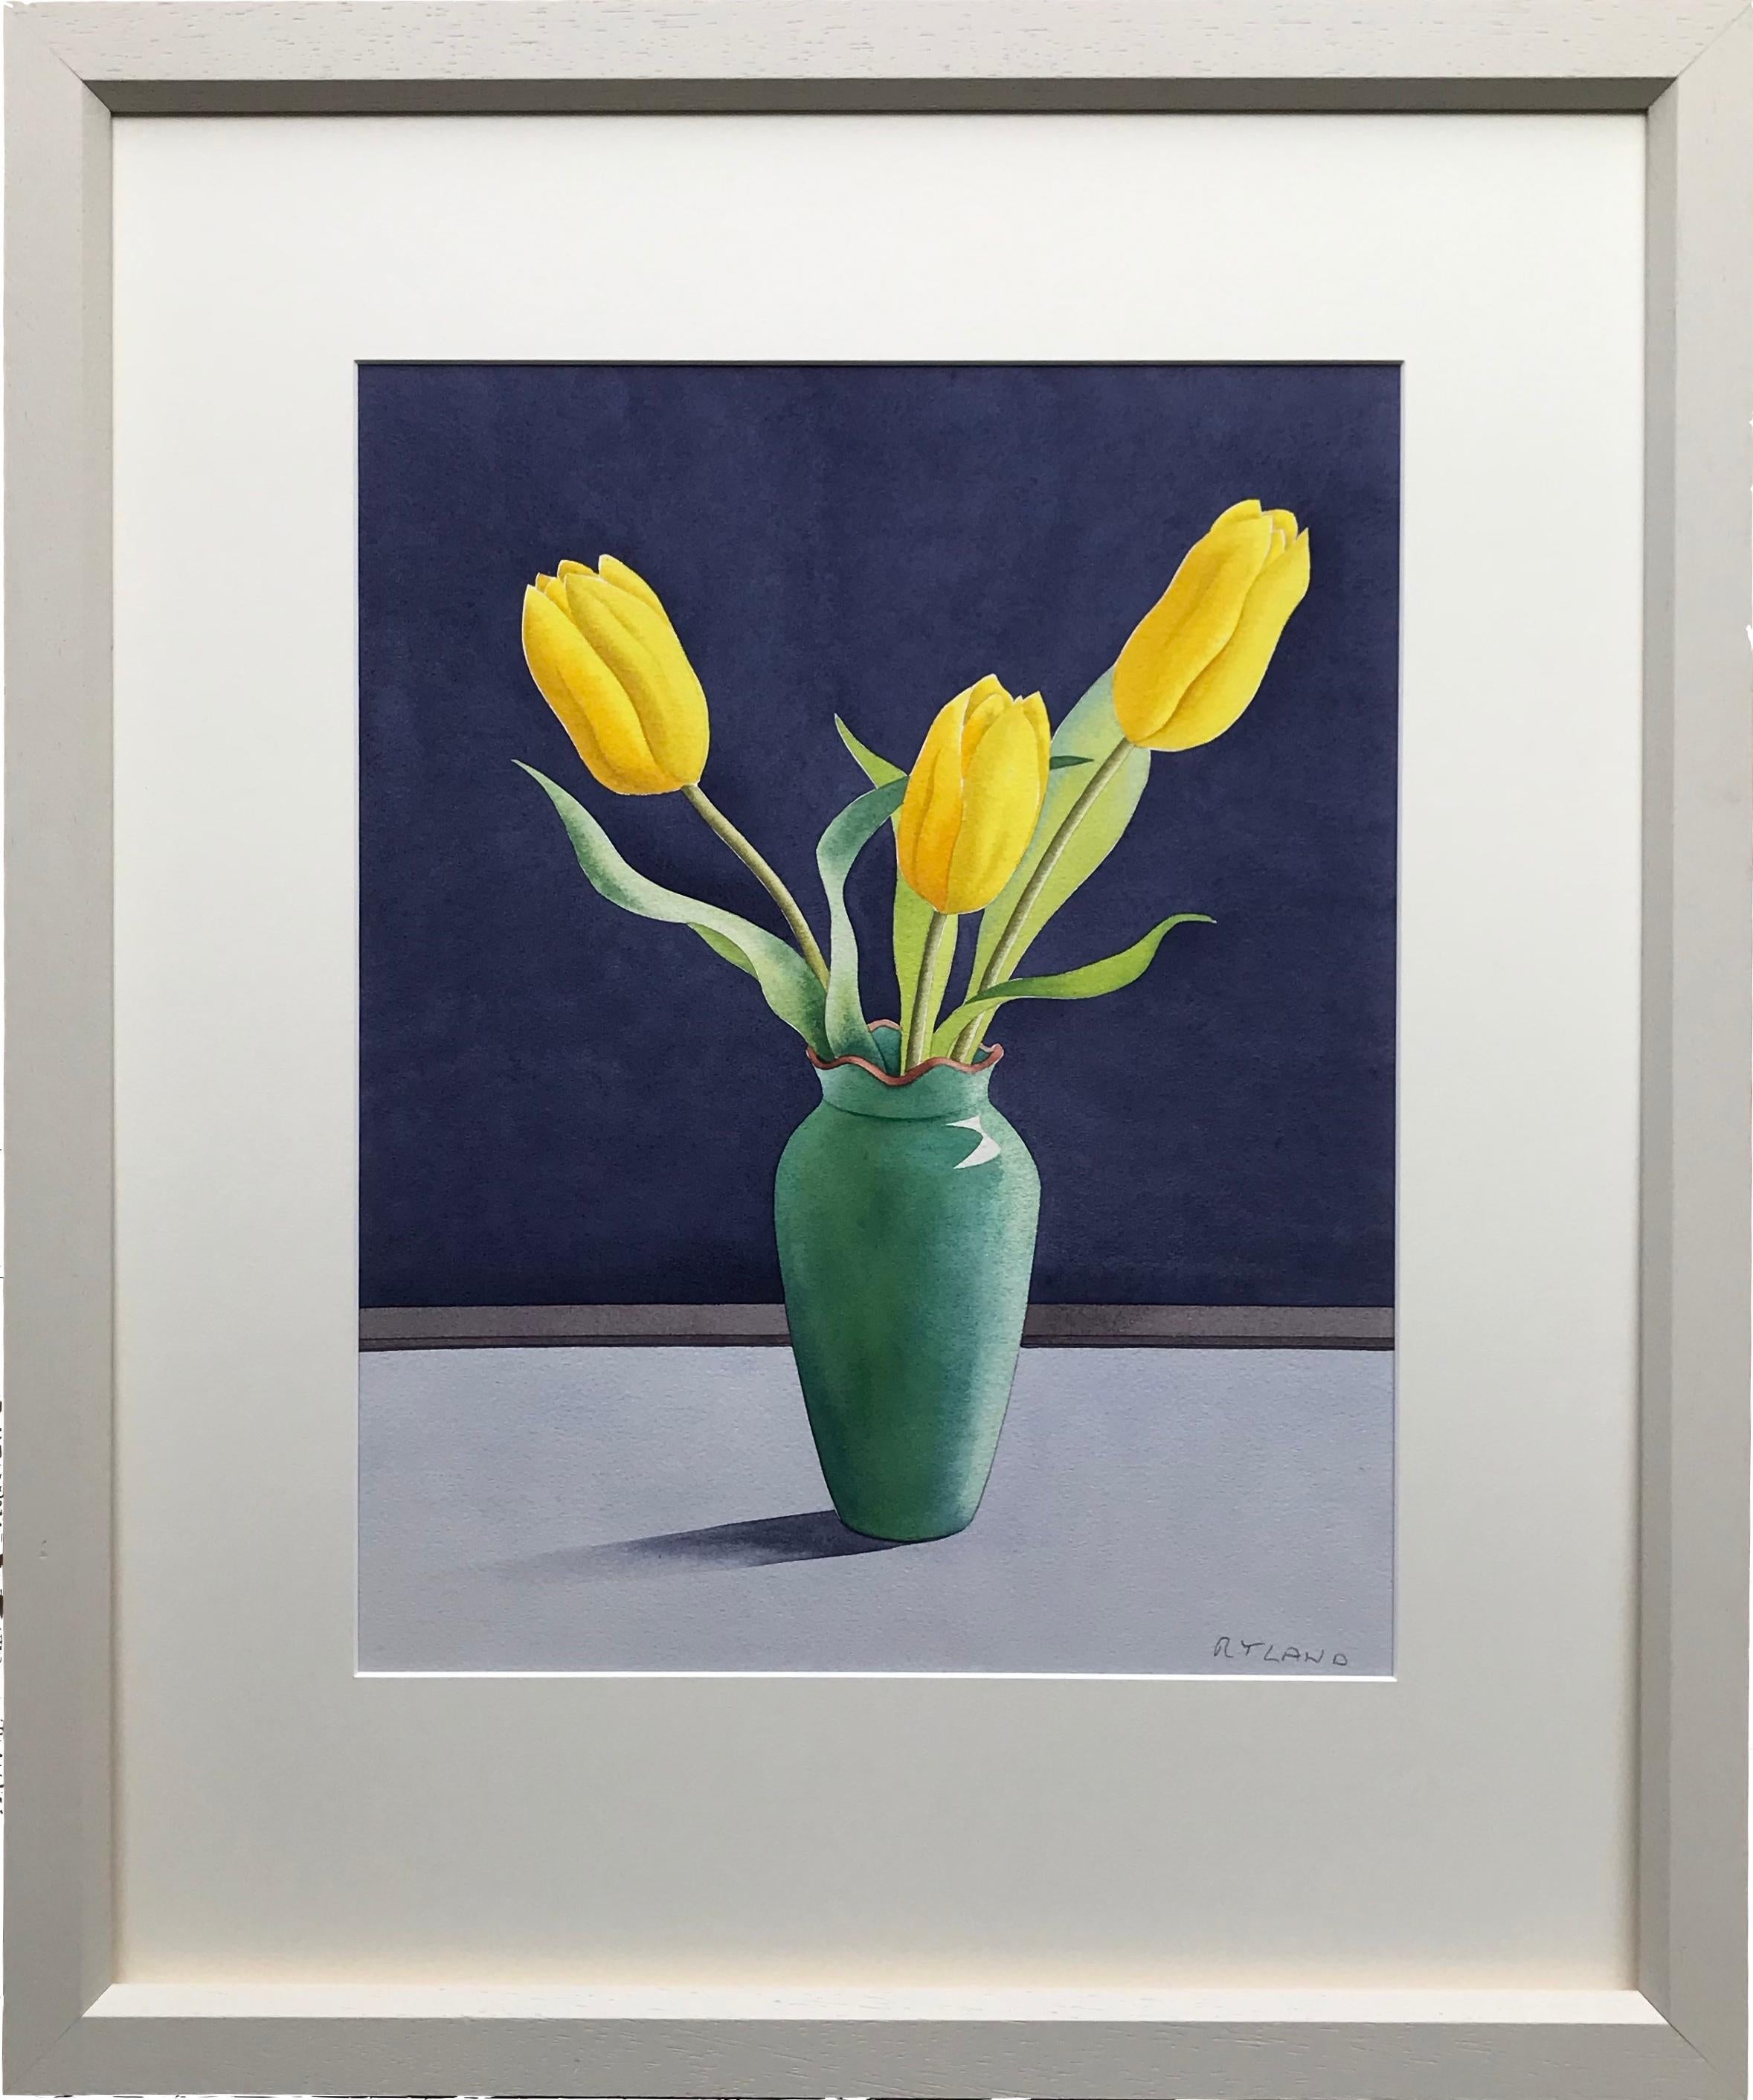 Christopher Ryland, Three Yellow tulips, still life, contemporary artist